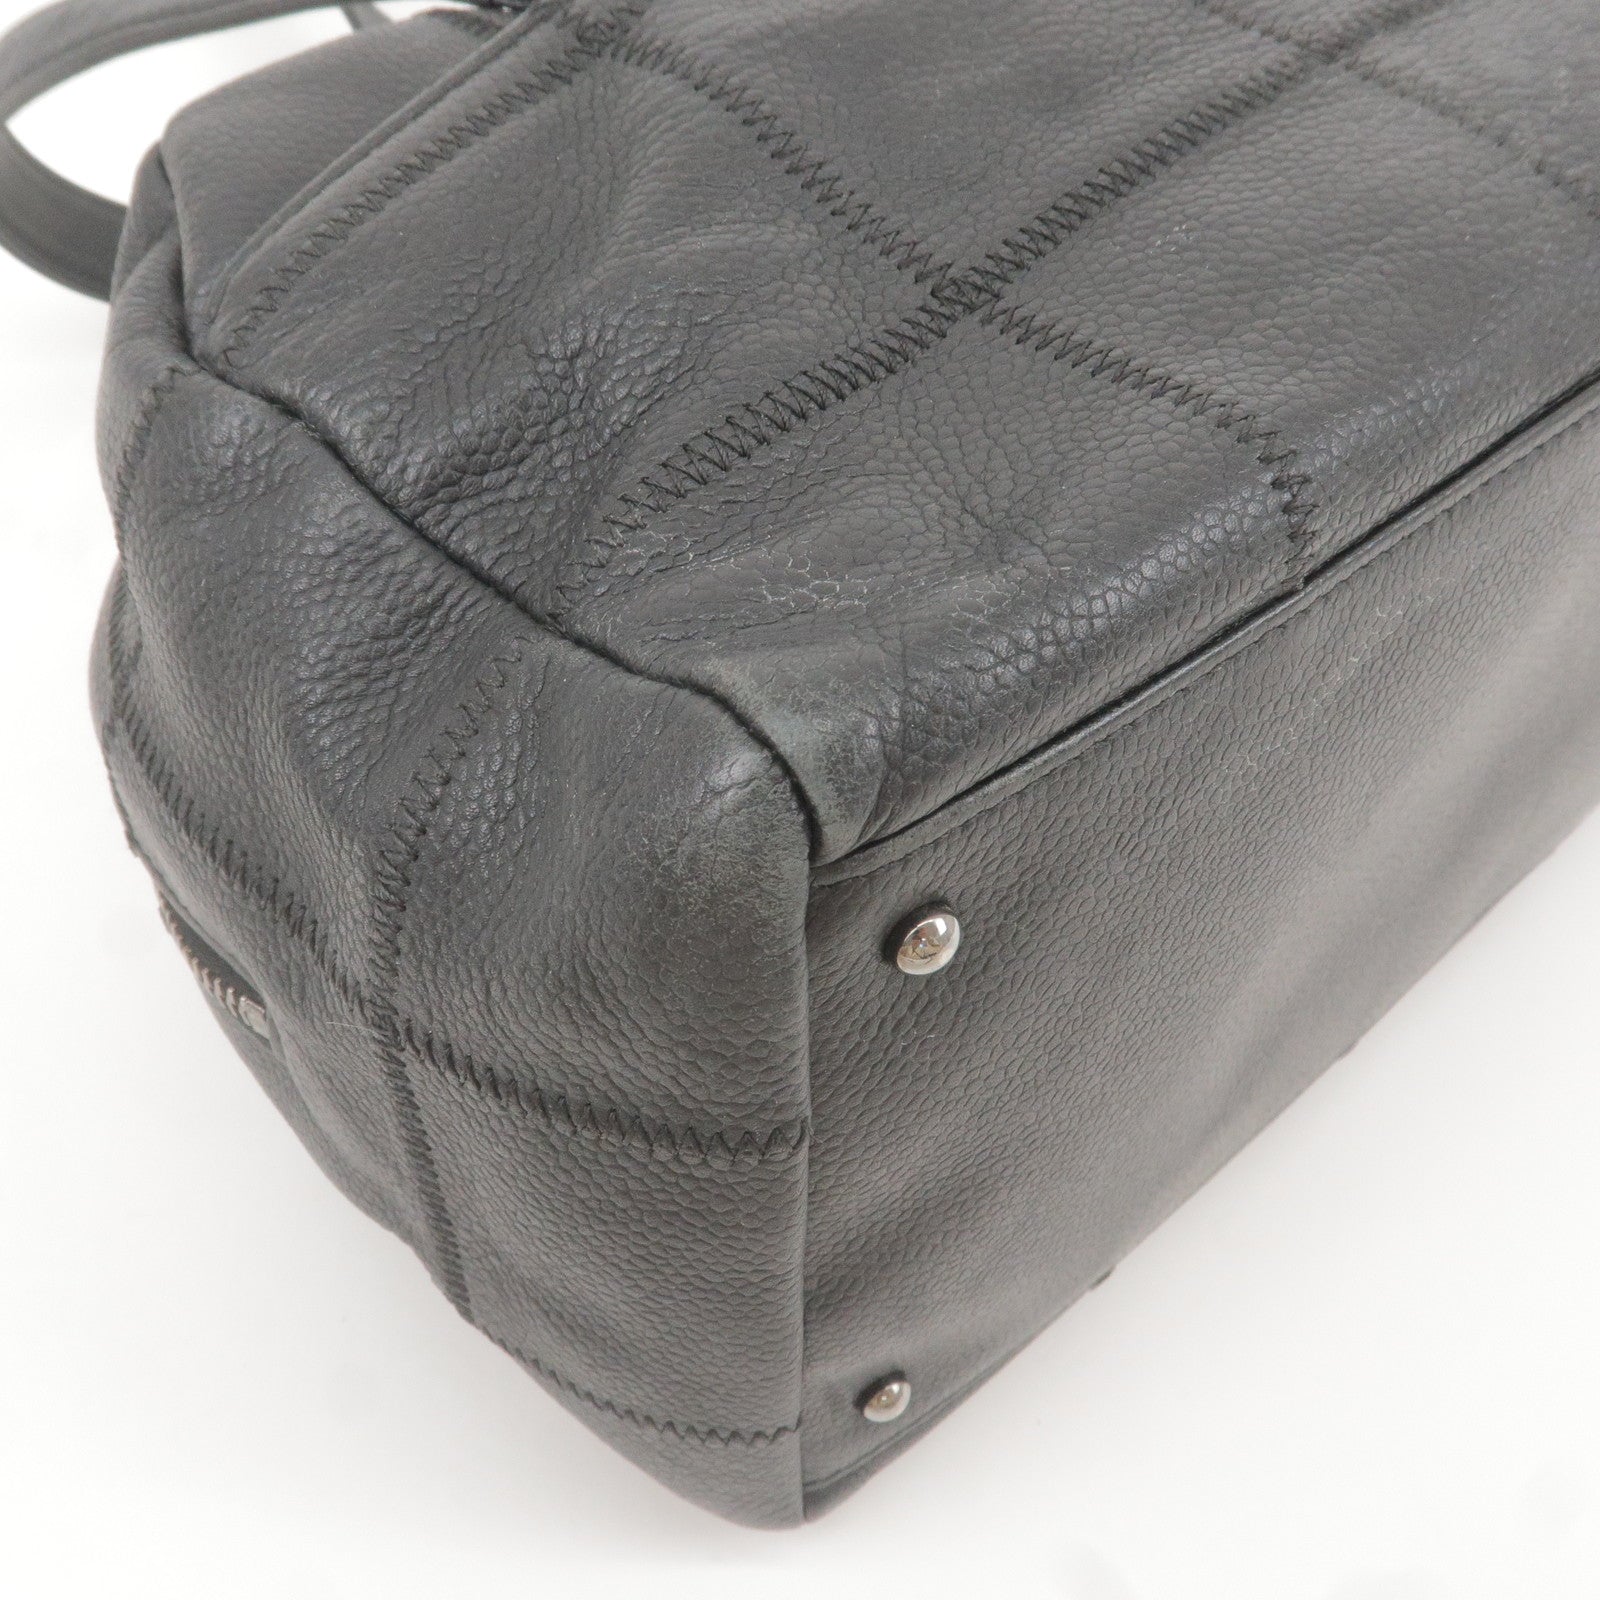 Used] Chanel CHANEL Chocolate Bar Handbag Mini Boston Bag Caviar